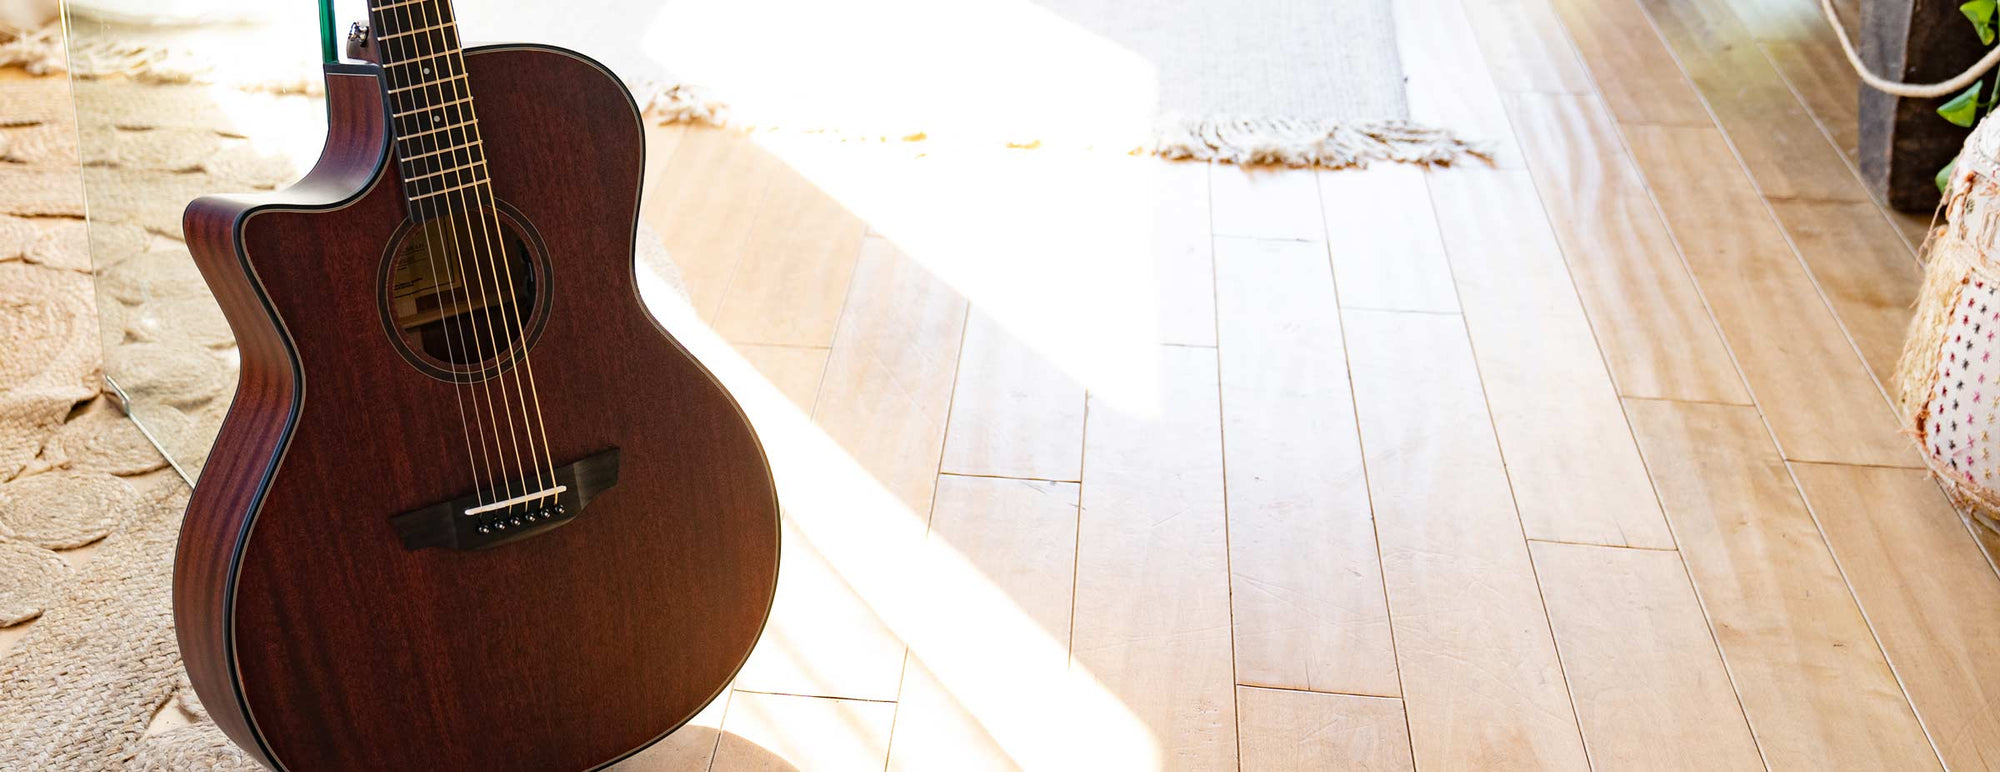 A left-handed Orangewood Morgan Mahogany guitar on light wood floor